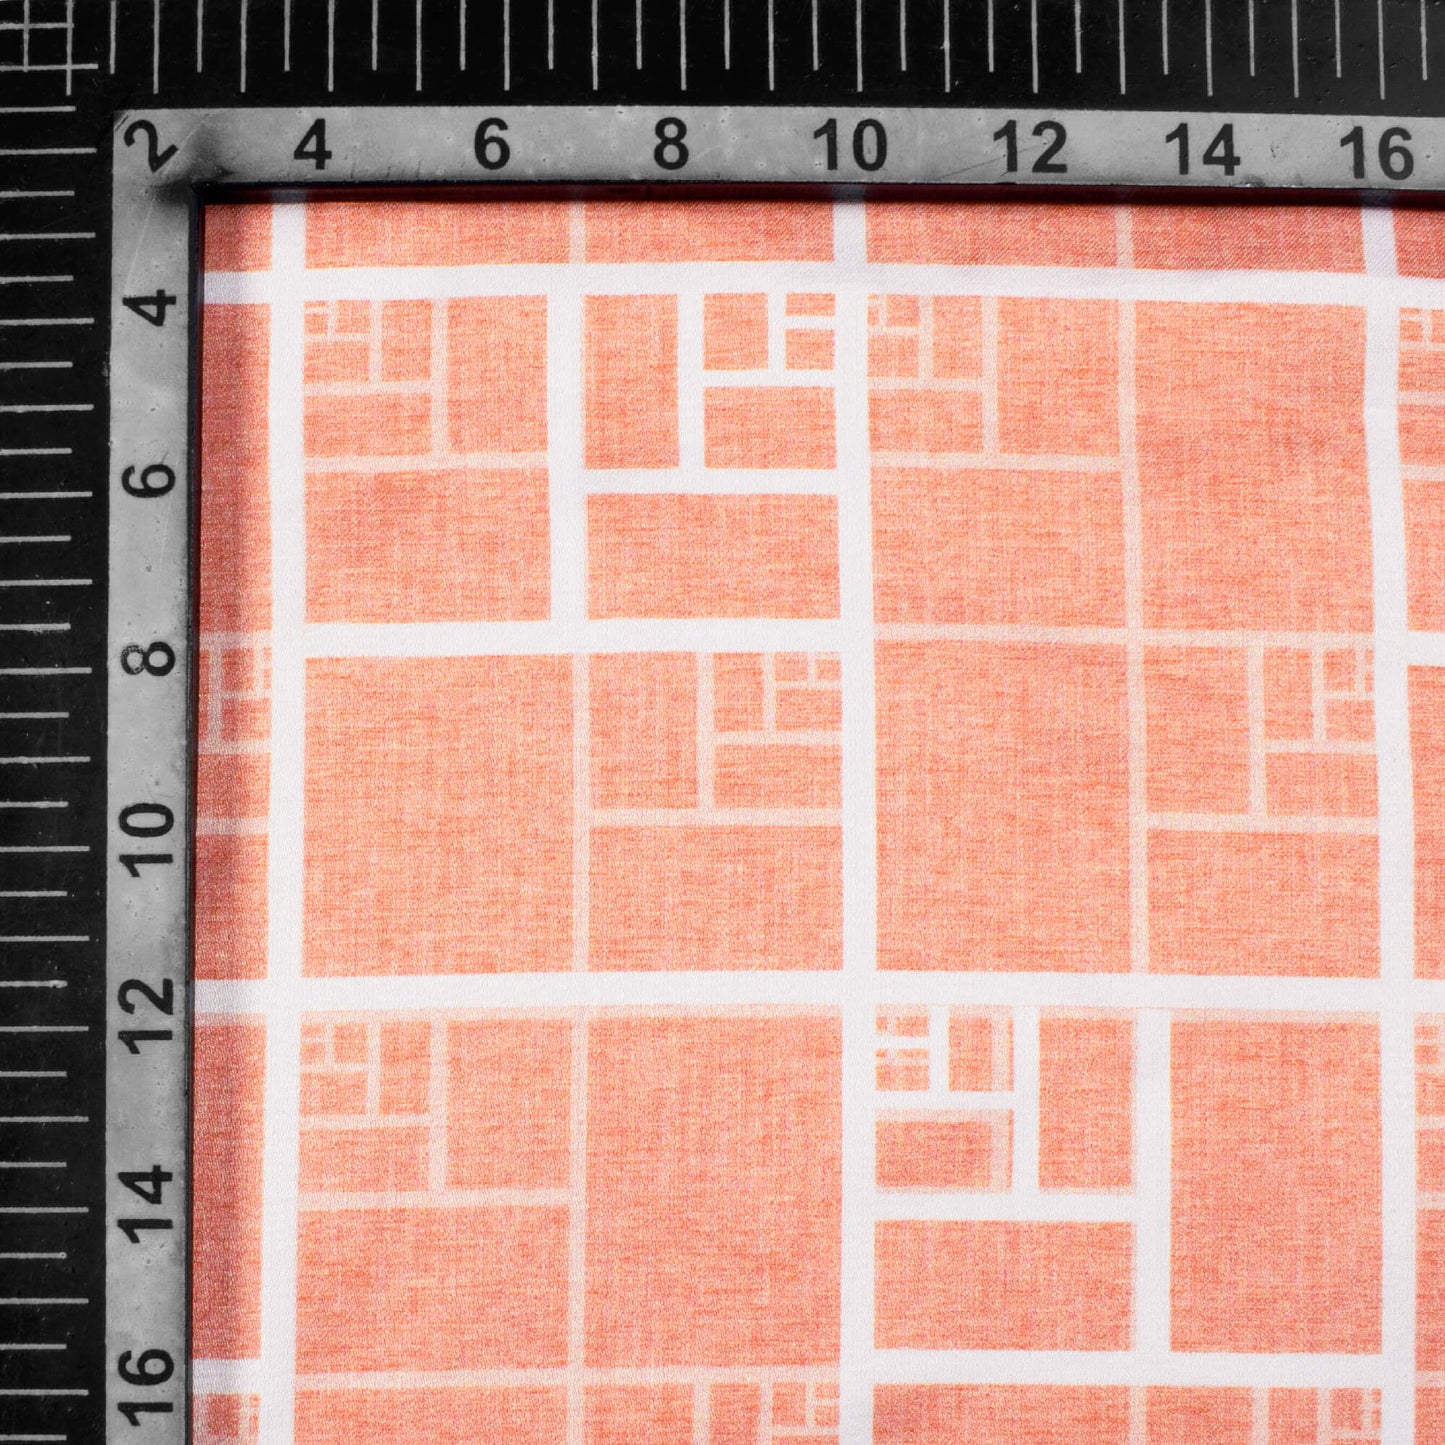 Peach And White Geometric Pattern Digital Print Crepe Silk Fabric